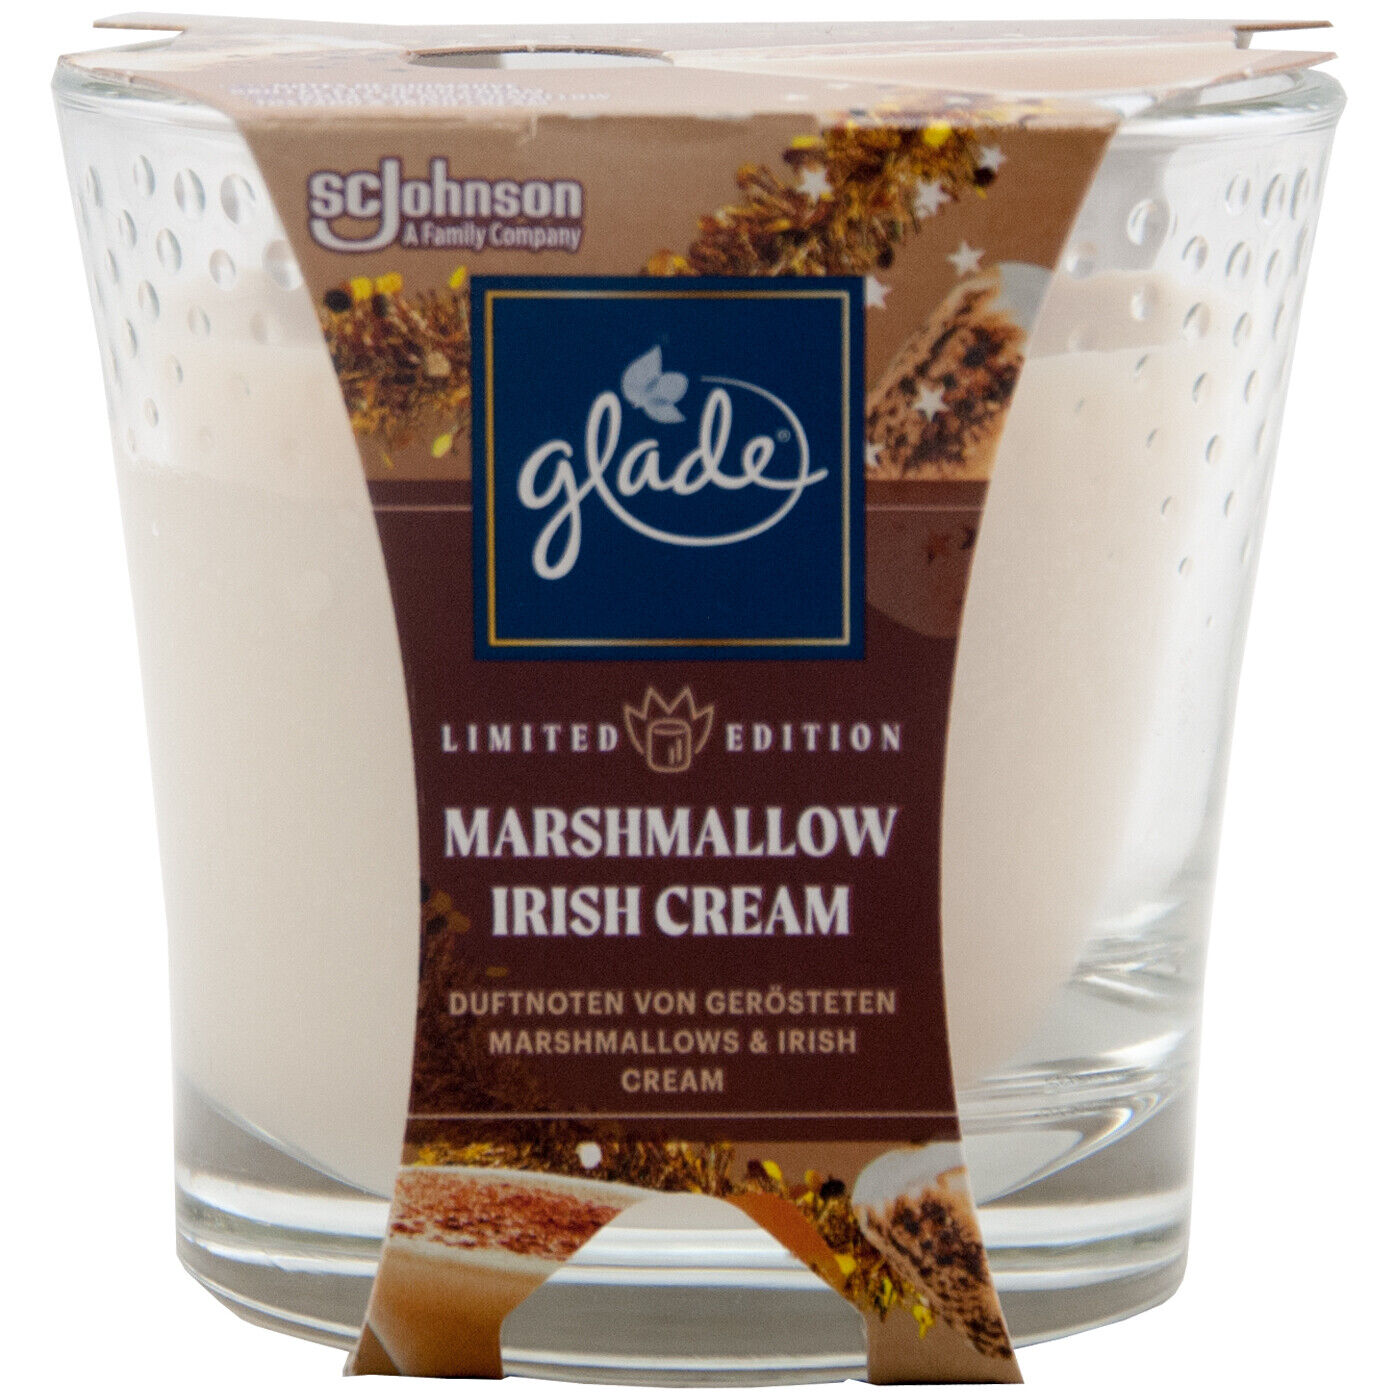 Glade by Brise vonná svíčka Marshmallow & Irish Cream 1 ks, 129g